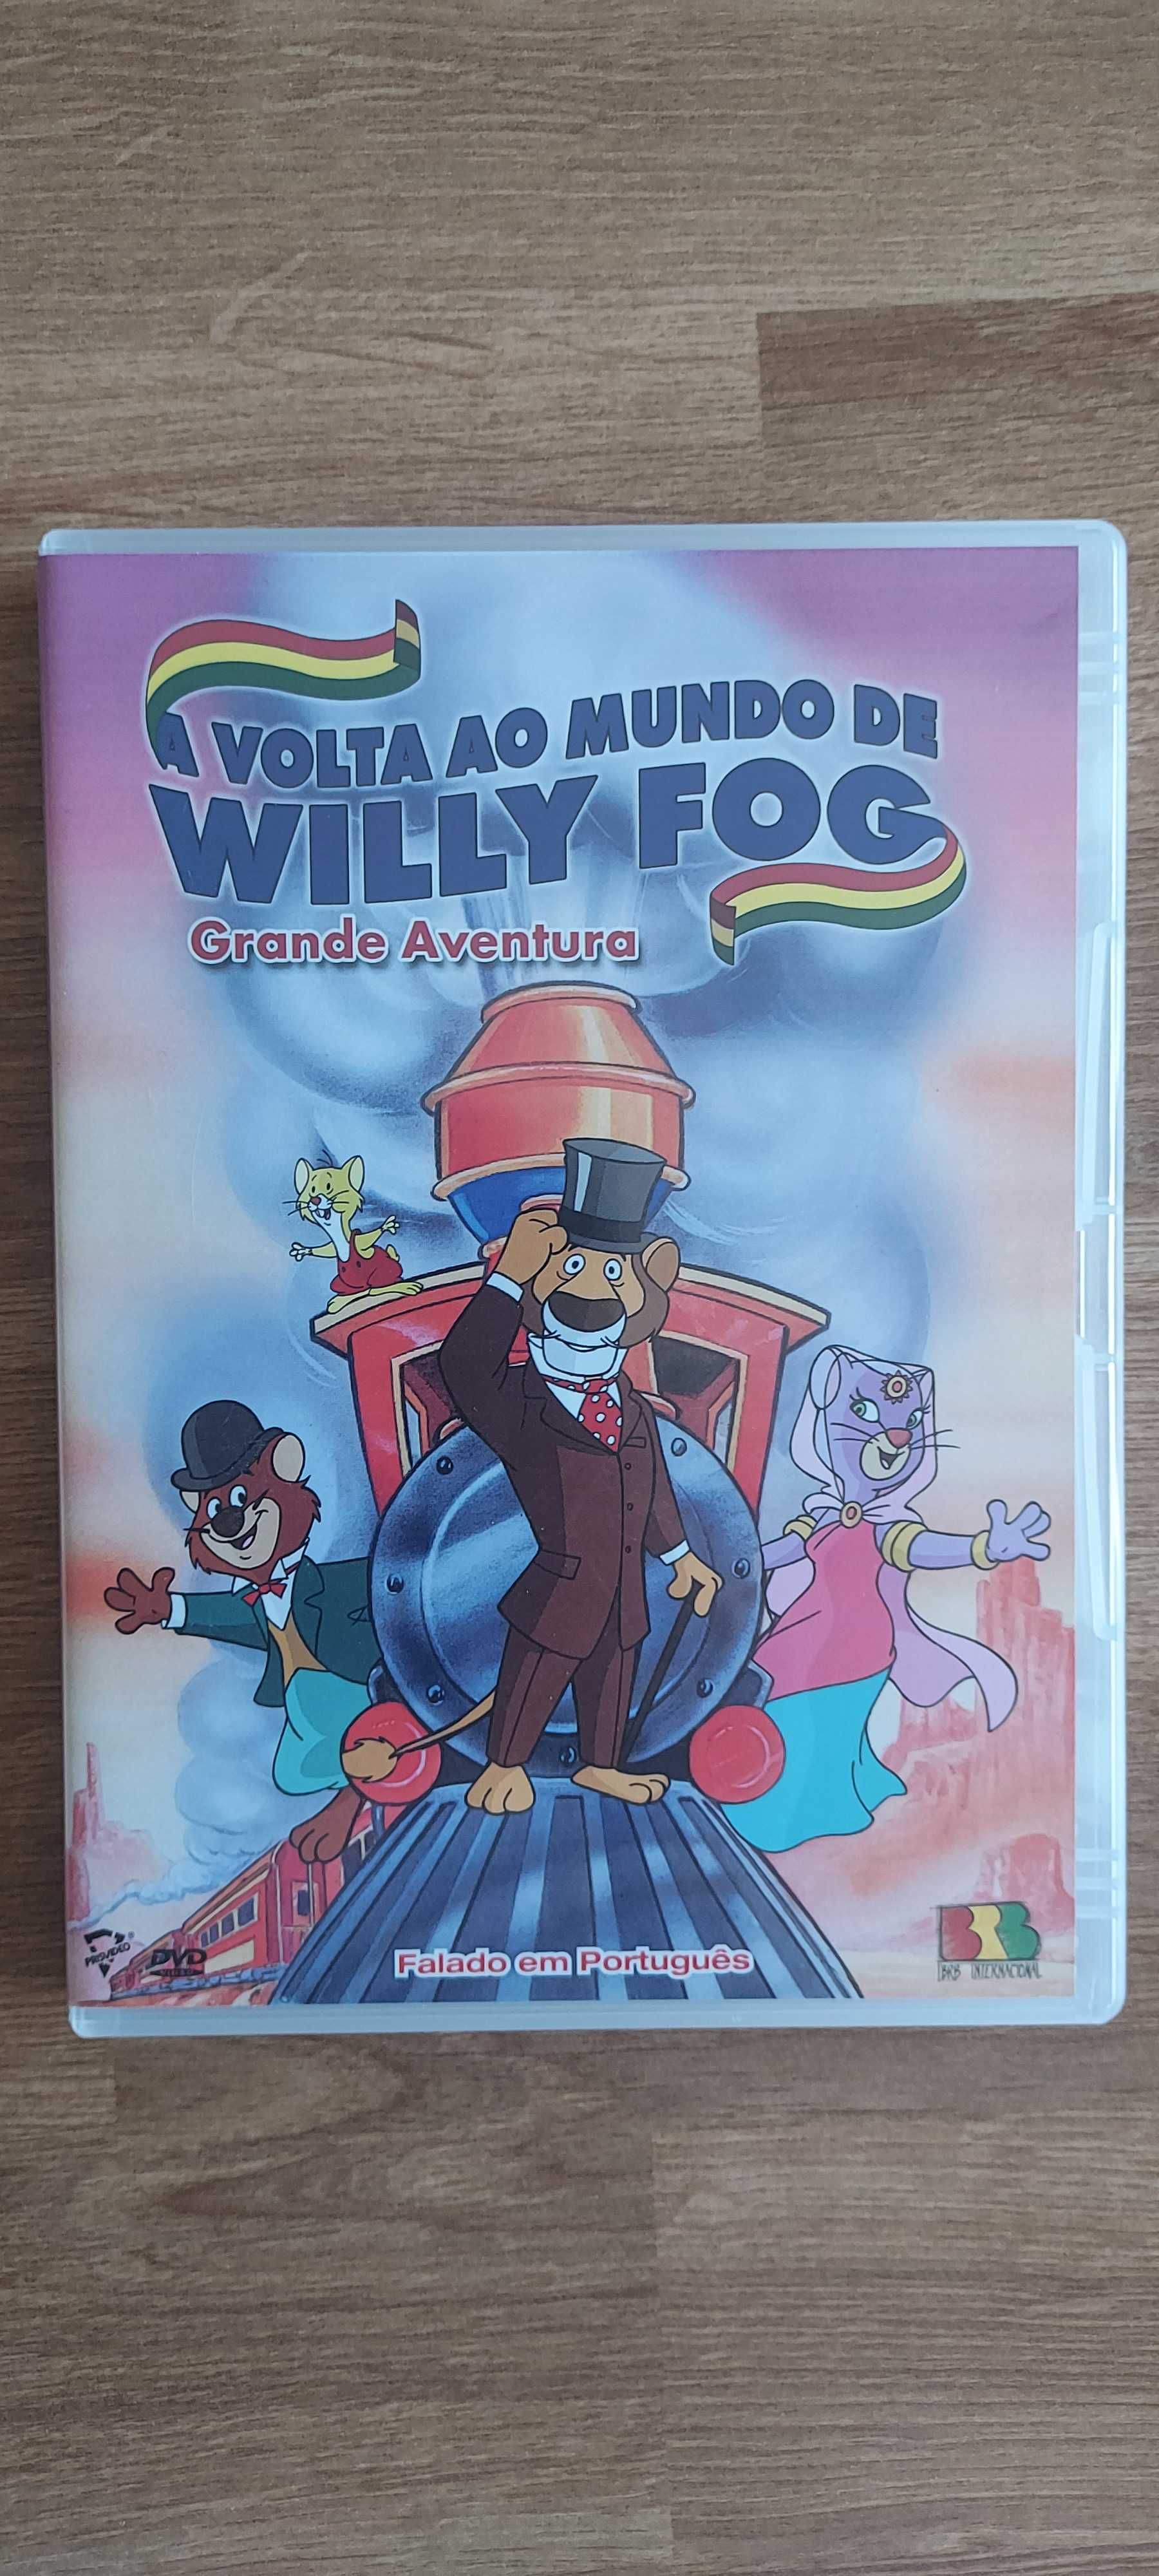 Vendo DVD A Volta ao mundo de Willy Fog – Grande Aventura